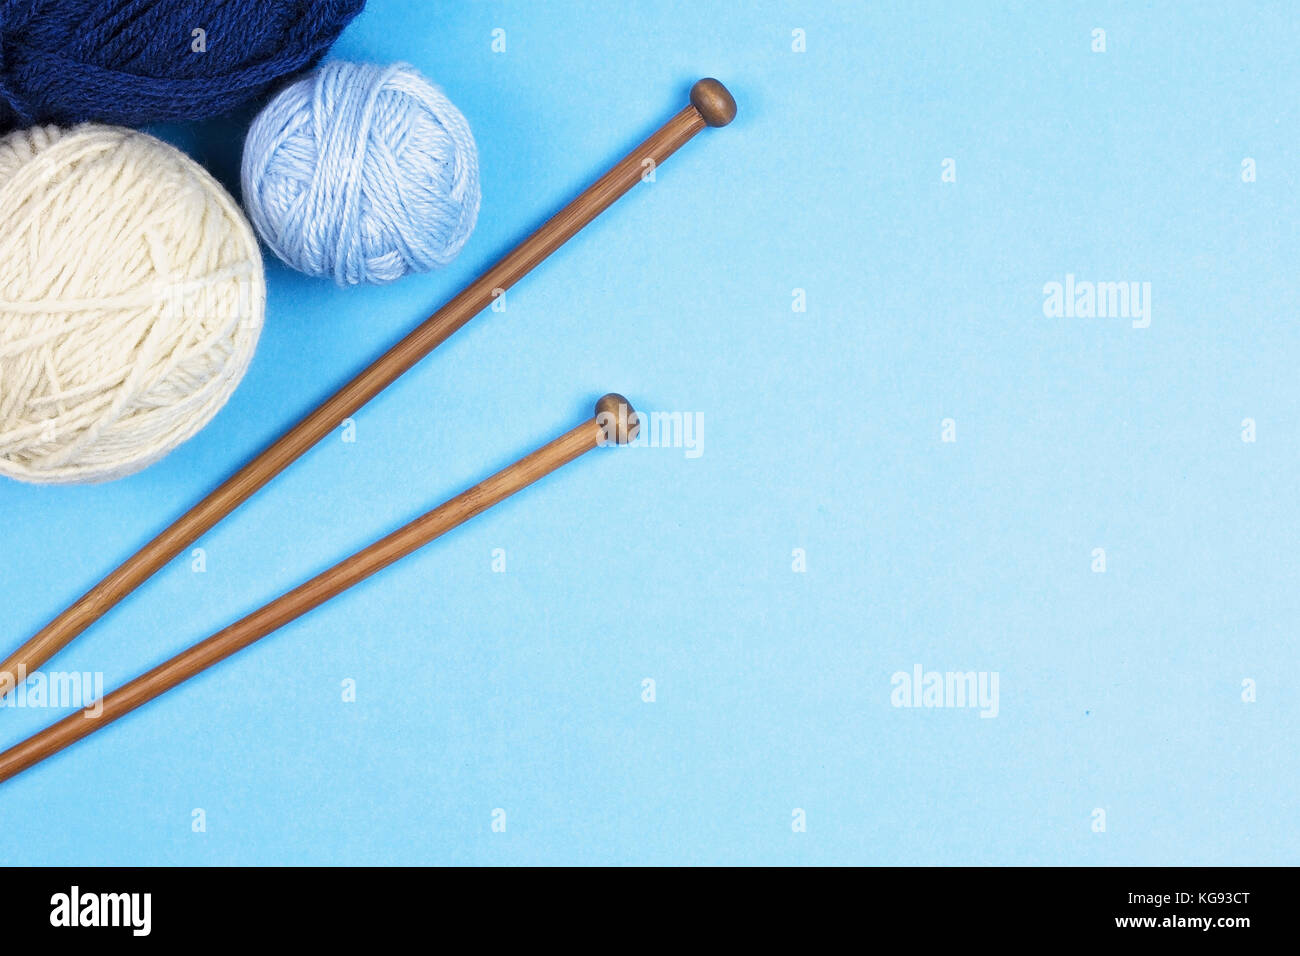 Knitting Background Knitting Needles And Balls Of Colorful Yarn